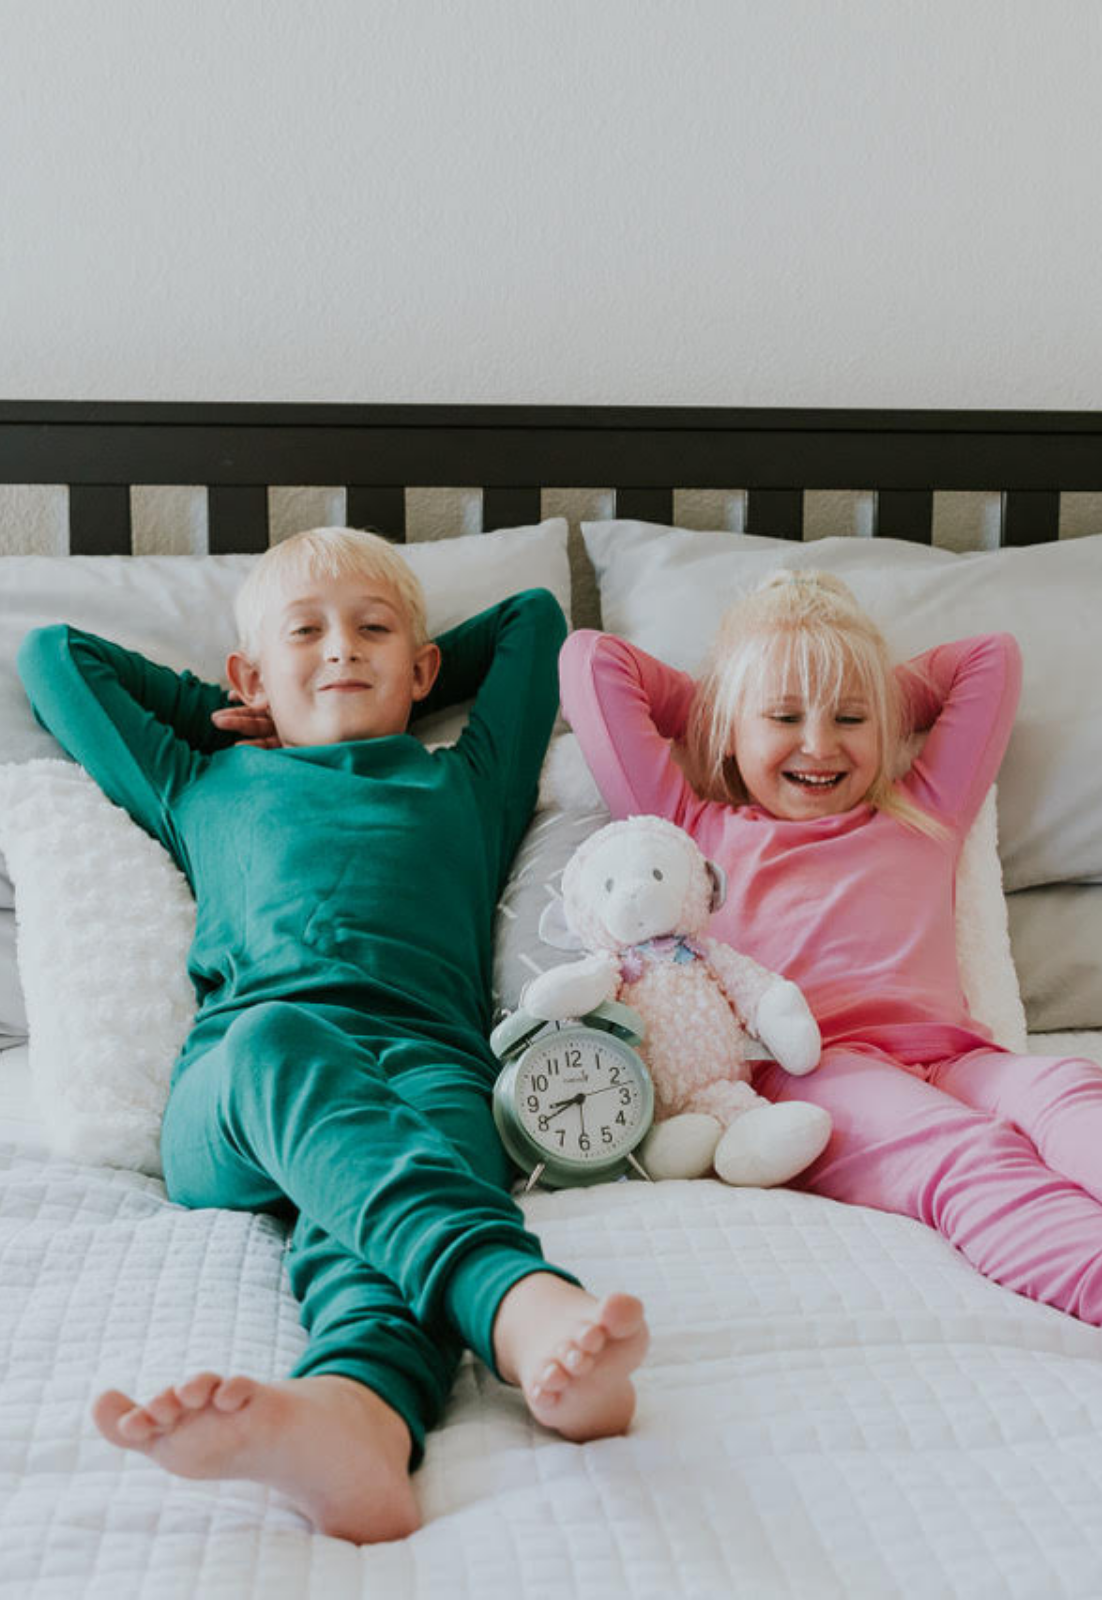 Children's Organic PJ Sets 2 piece sleepwear 100% cotton - City